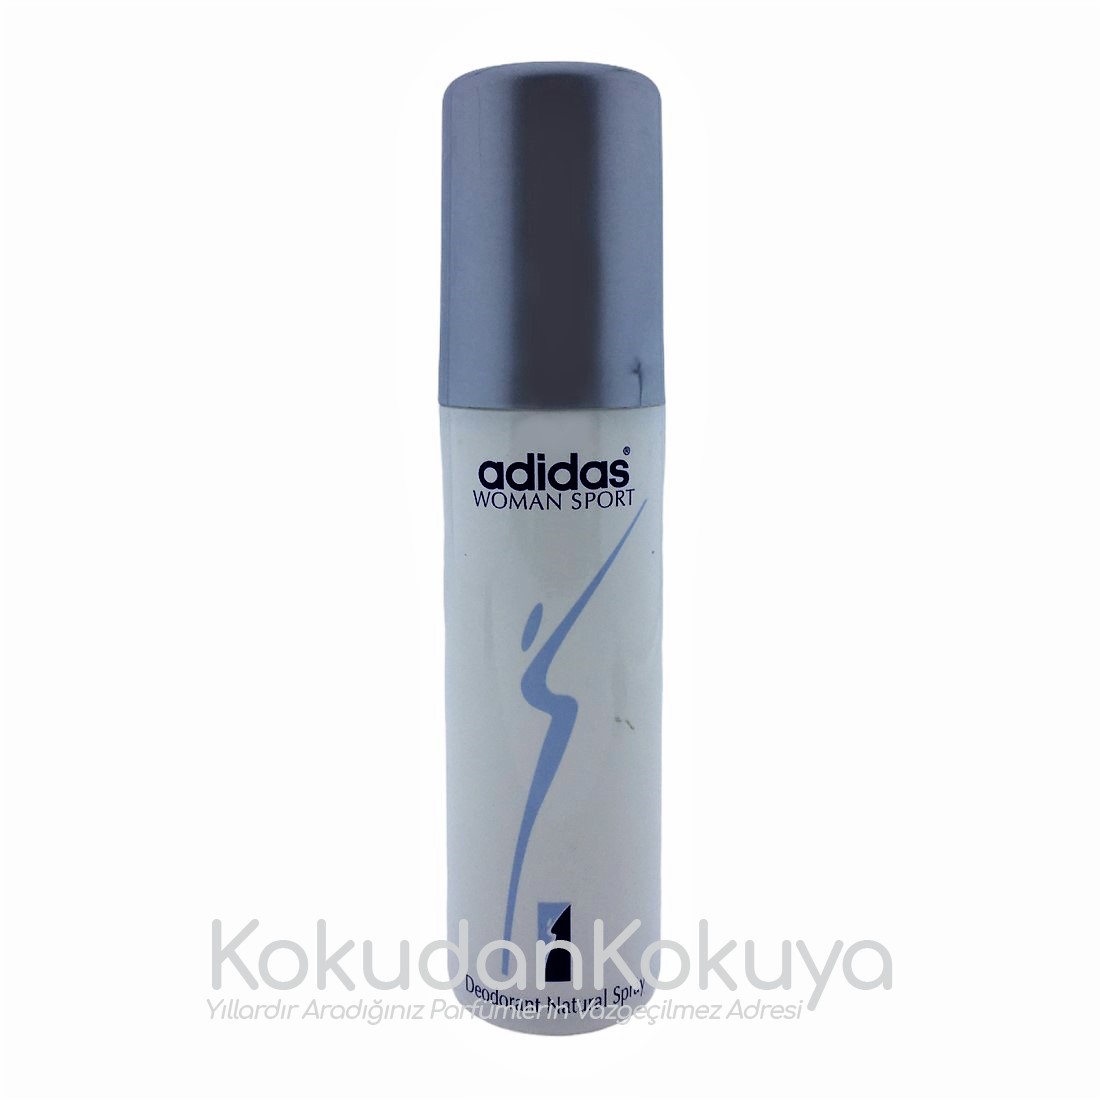 ADIDAS Woman Sport Deodorant Kadın 100ml Deodorant Spray (Cam) 